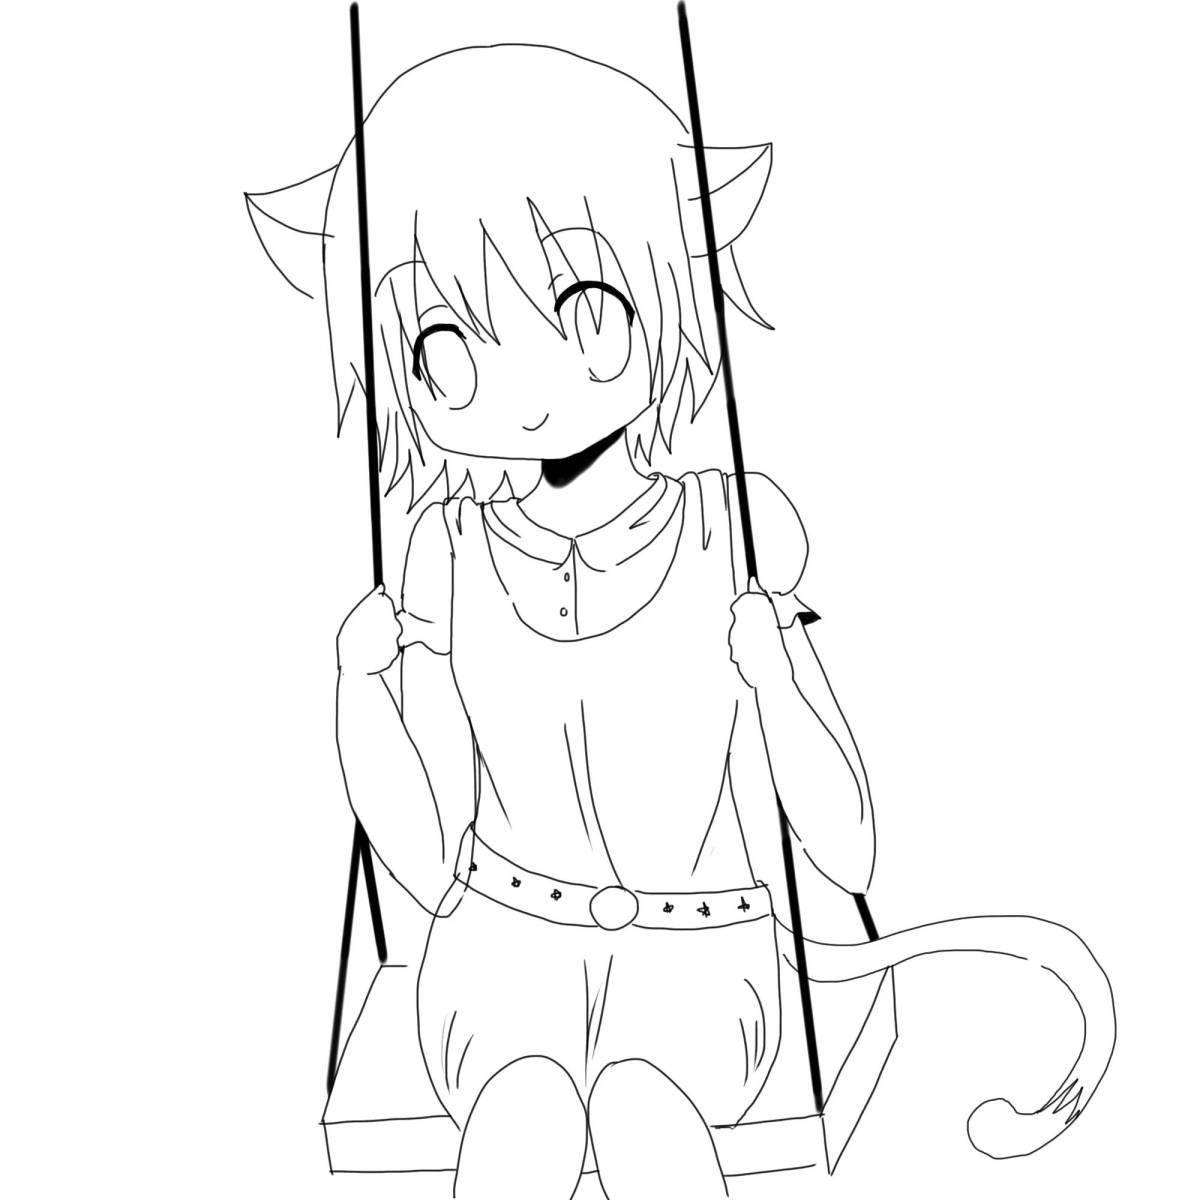 Creative coloring cat anime girl